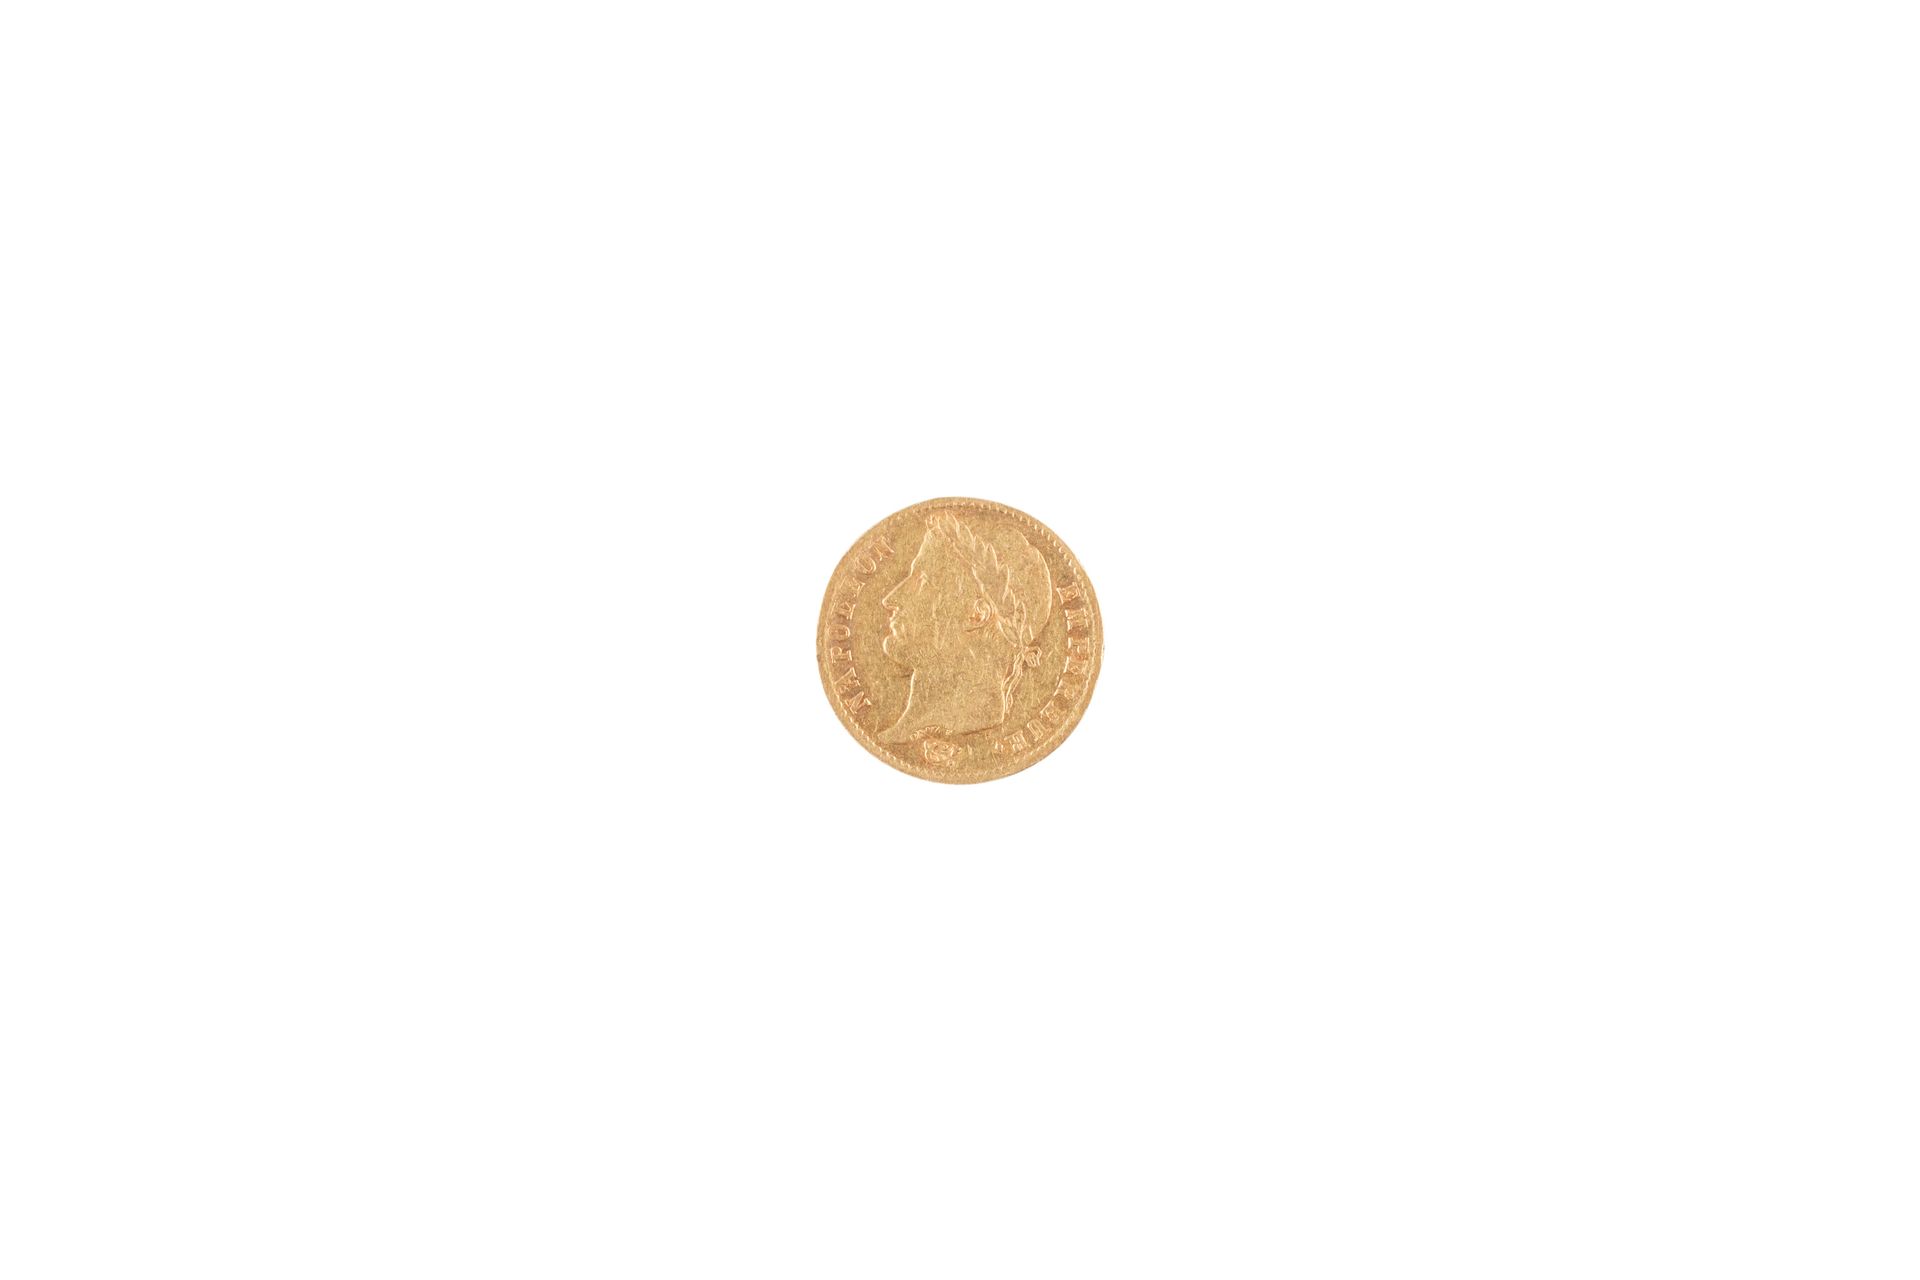 Null 20 francs gold 1811 A Paris, 6,41 gr. G. 1025

TTB